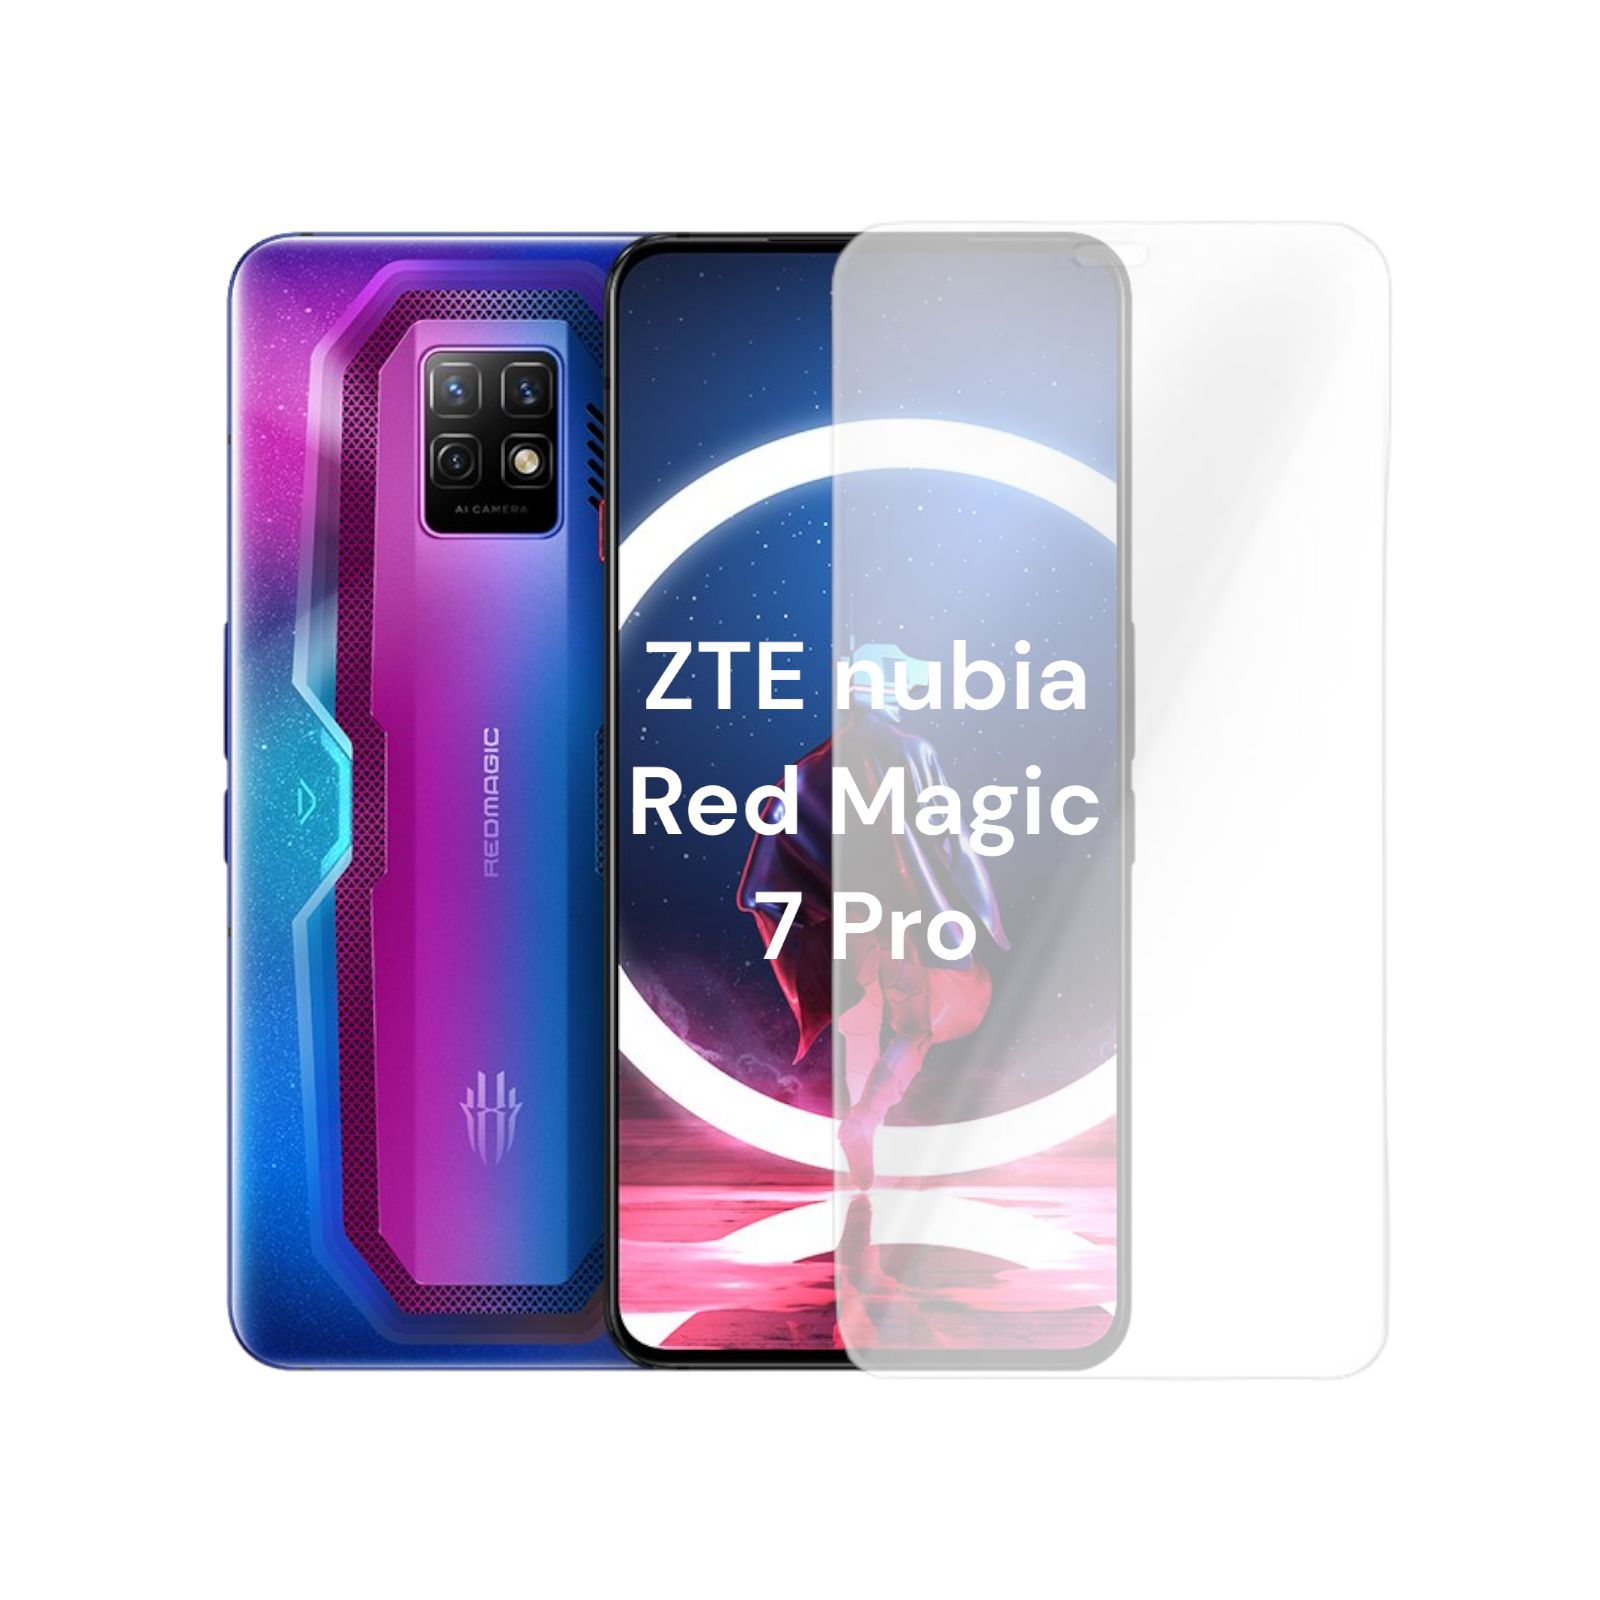 Zte red magic 7. Nubia Red Magic 7 Pro. Red Magic 7 Pro цена.